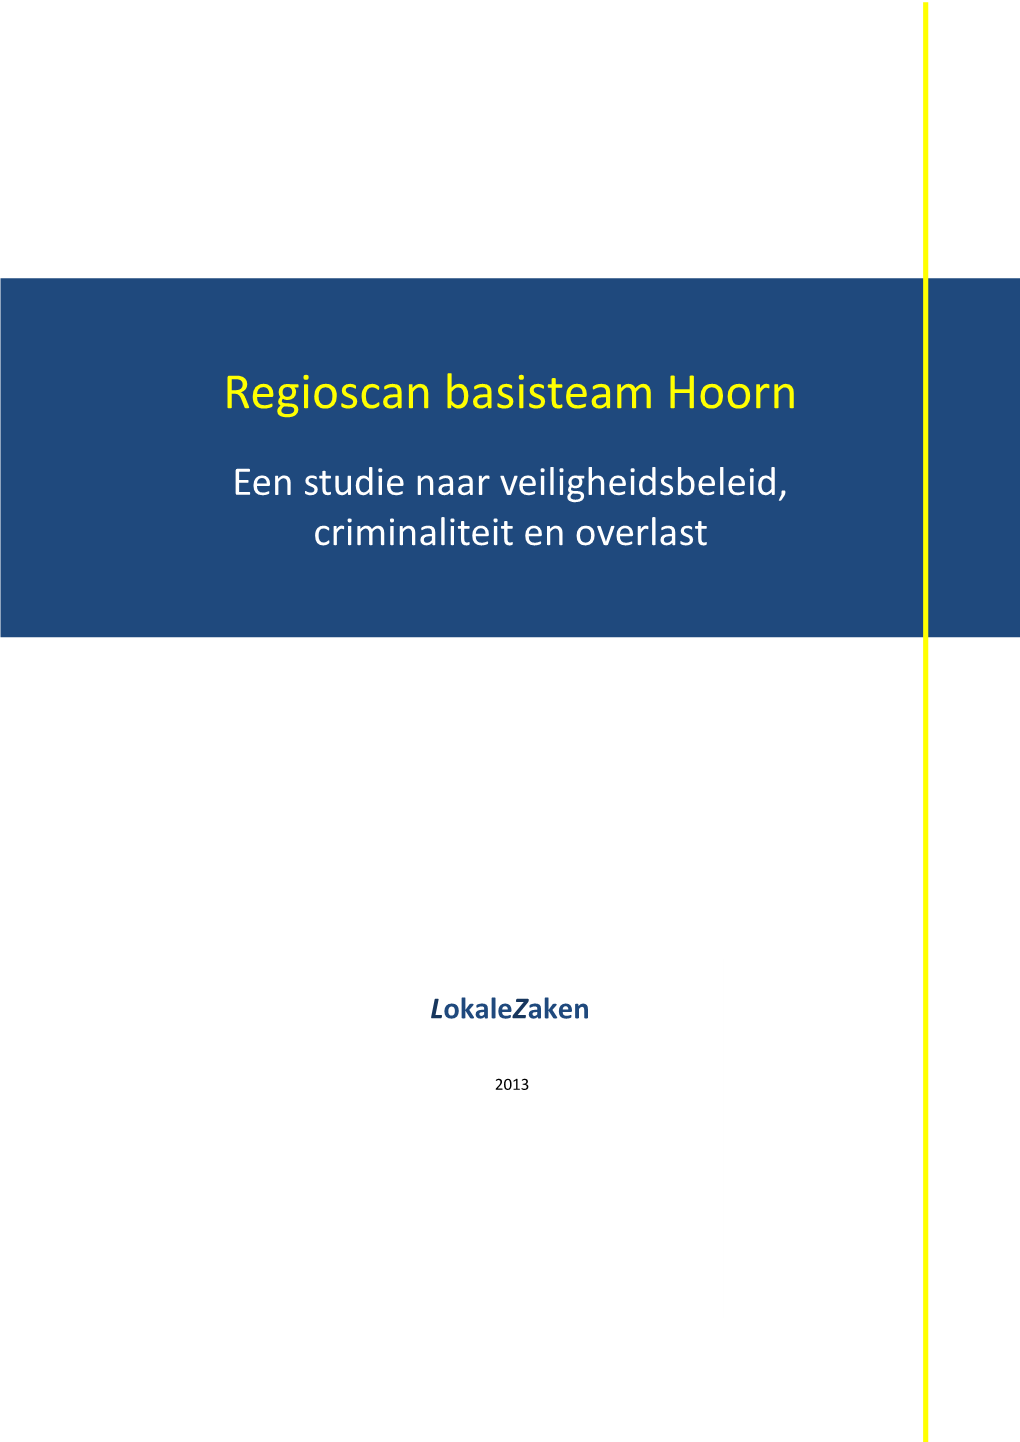 Regioscan Basisteam Hoorn